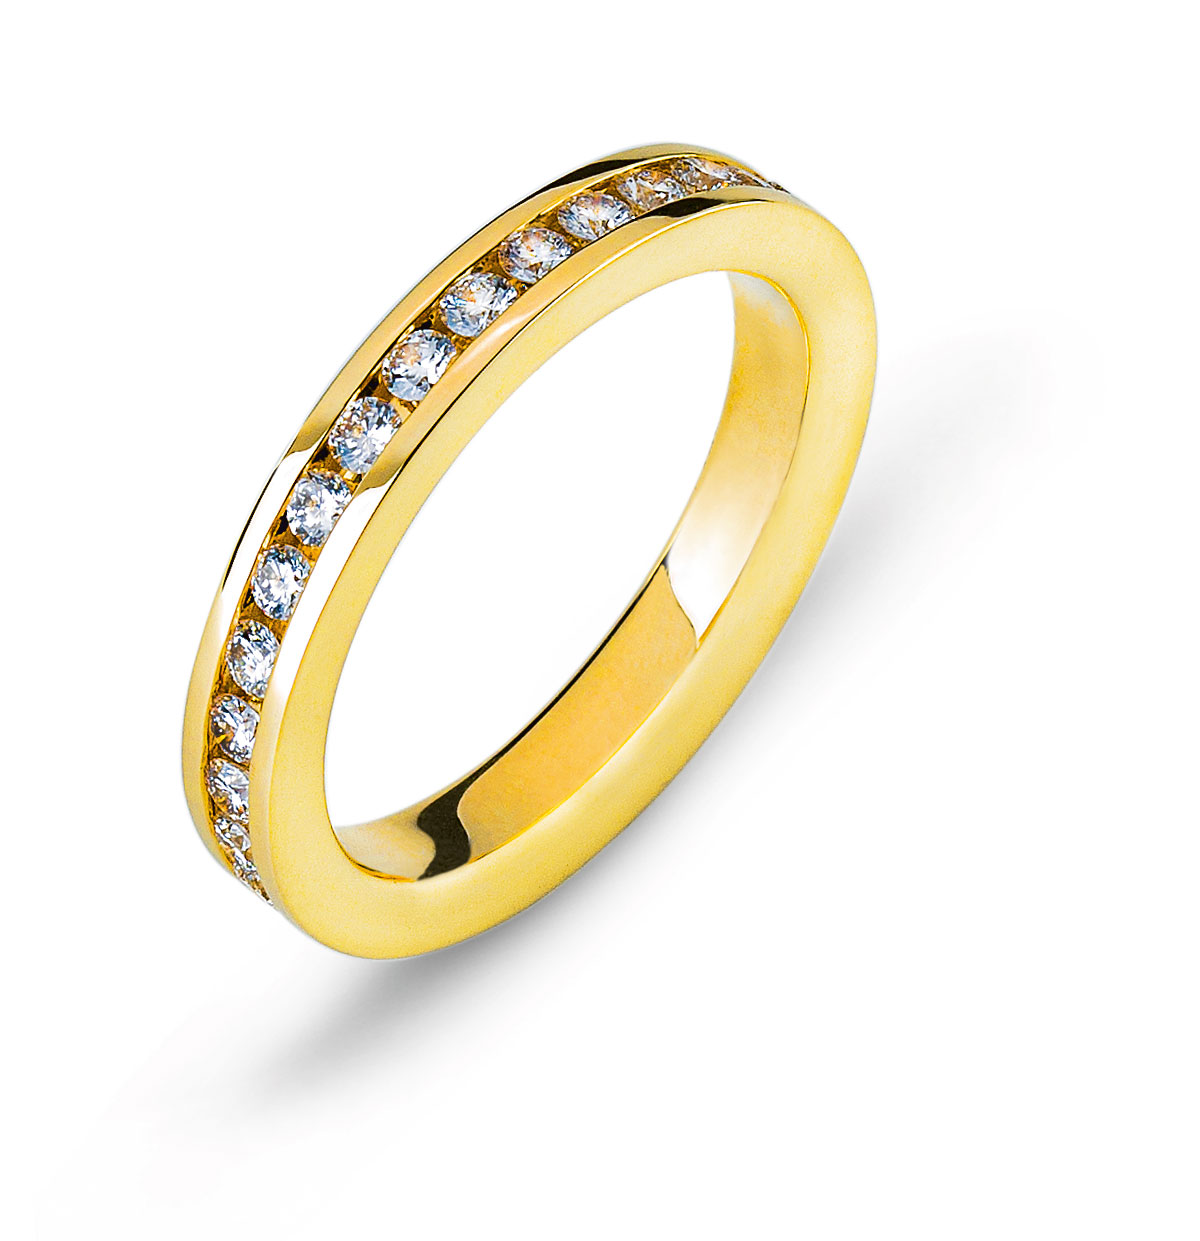 AURONOS Prestige Eternity Ring Yellow Gold 18K Channel Setting Diamonds 0.93ct